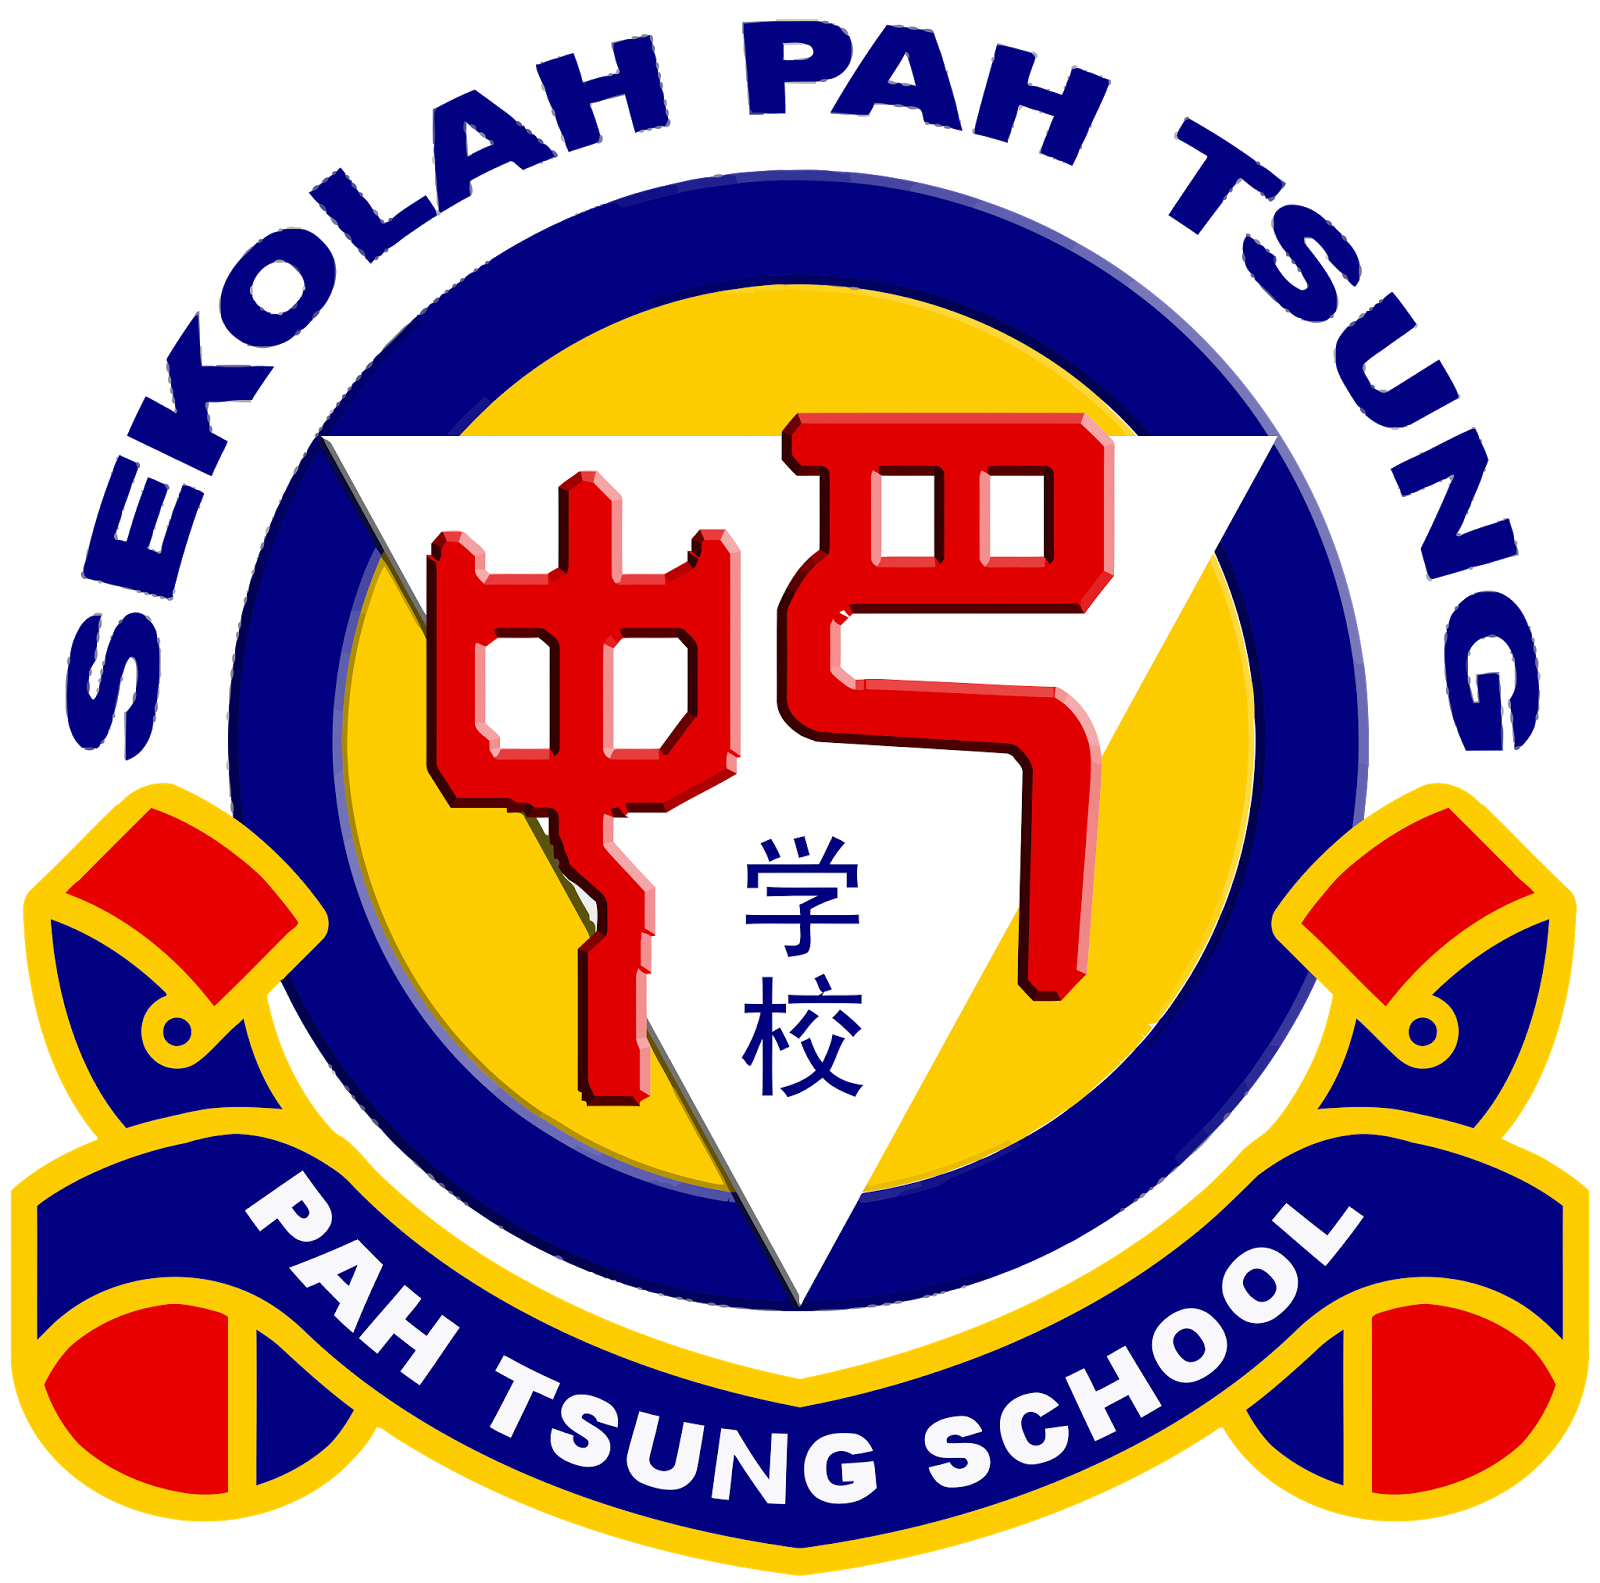 Pah Tsung School